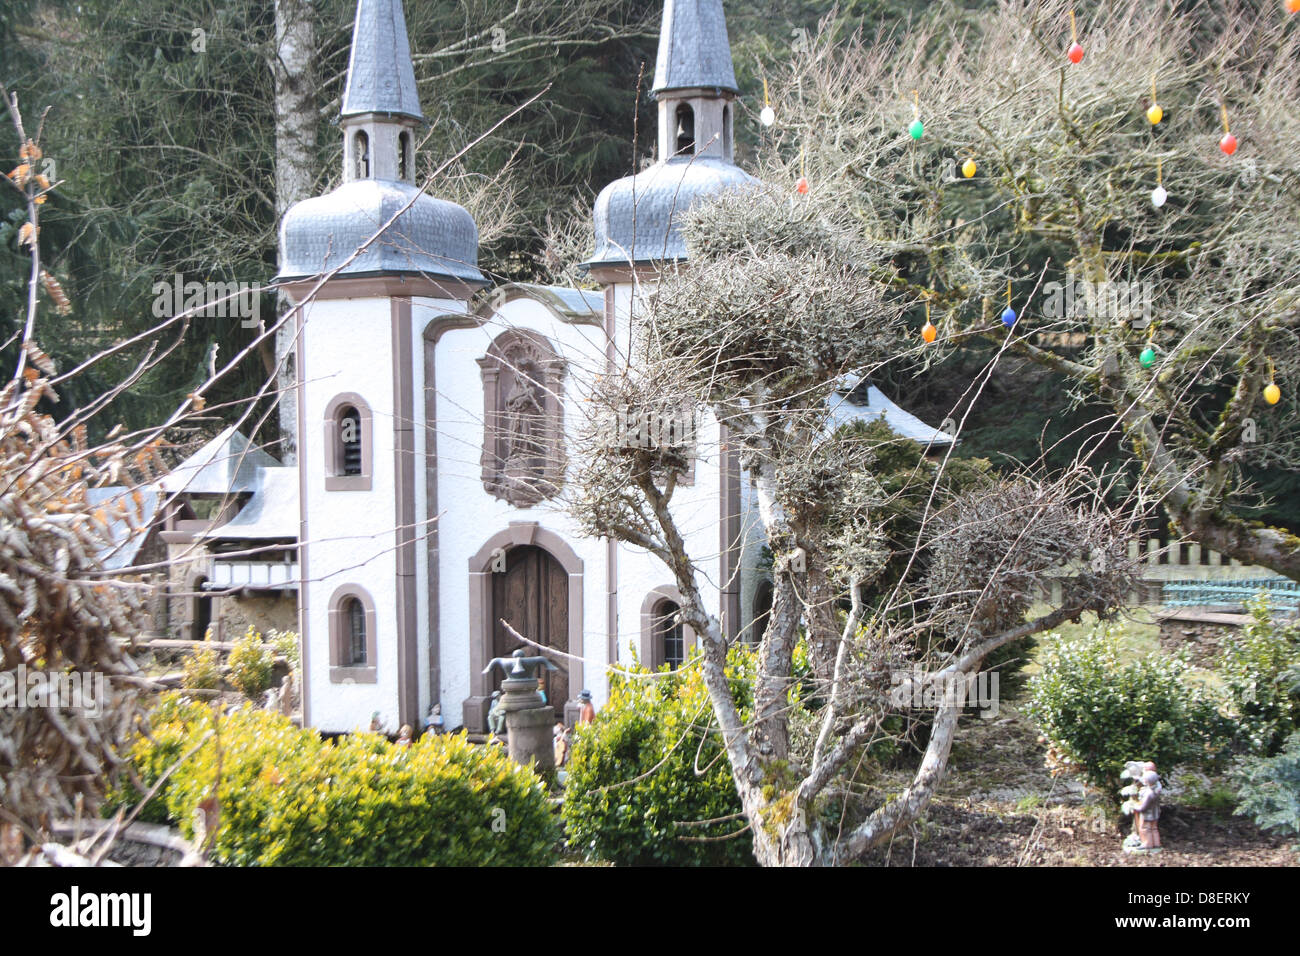 A church in a model village. Stock Photo